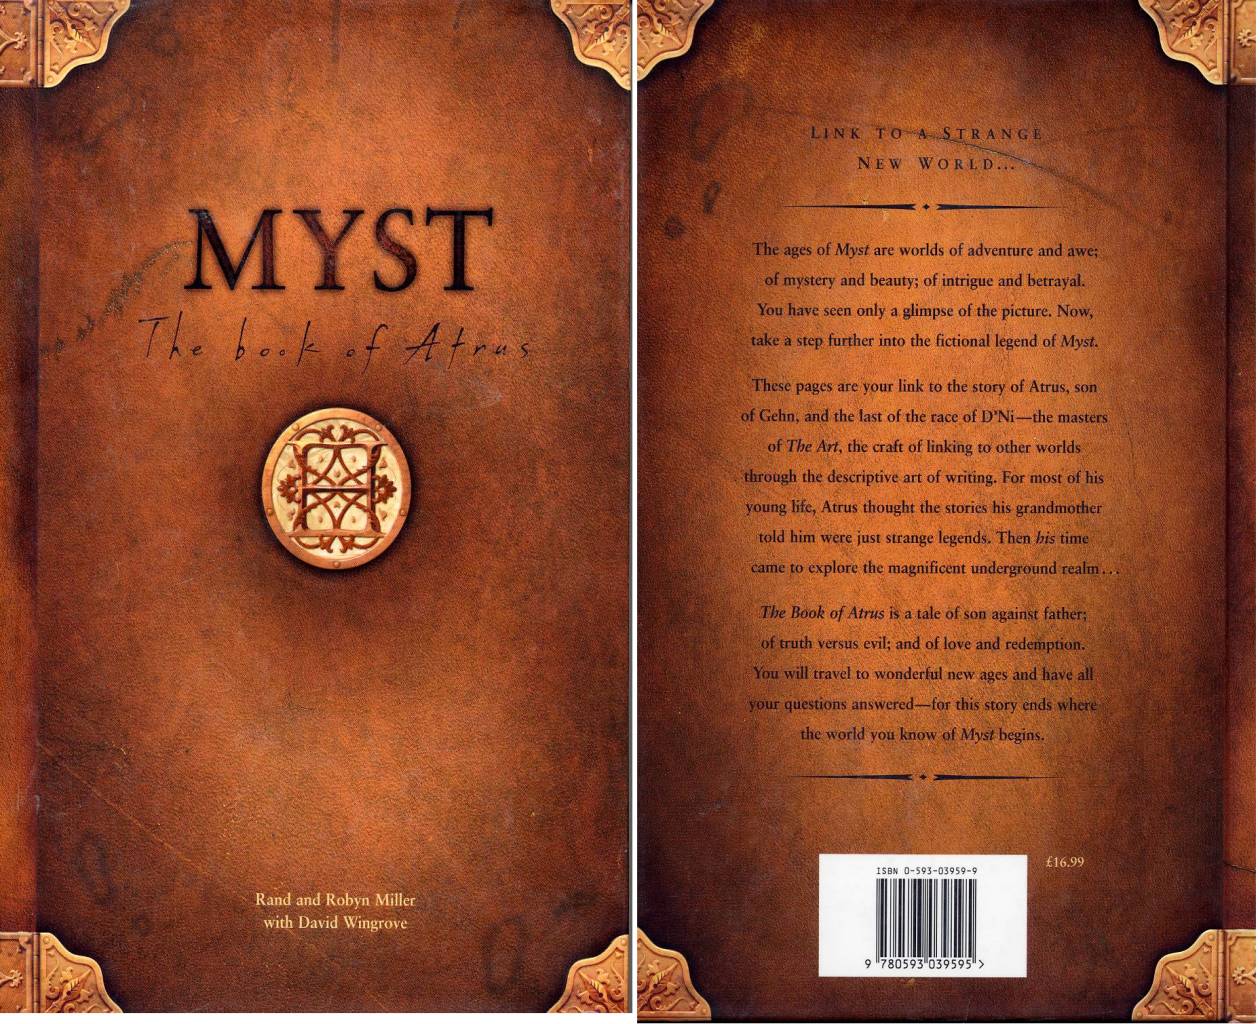 Myst books torrent les centurions dvdrip torrent